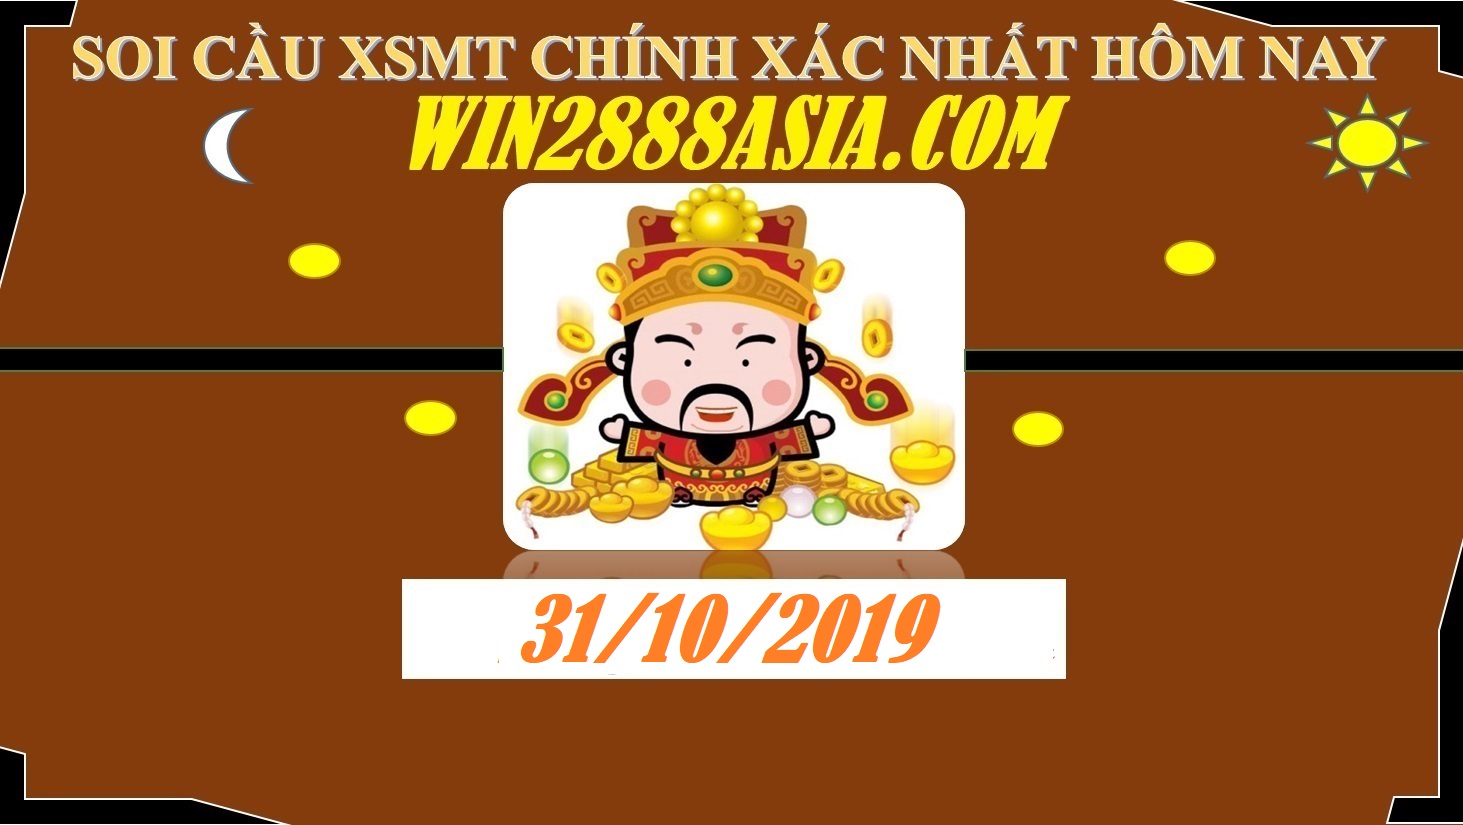 Soi cầu XSMT 31-10-2019 Win2888 Dự đoán Xổ Số Miền Trung thứ 5